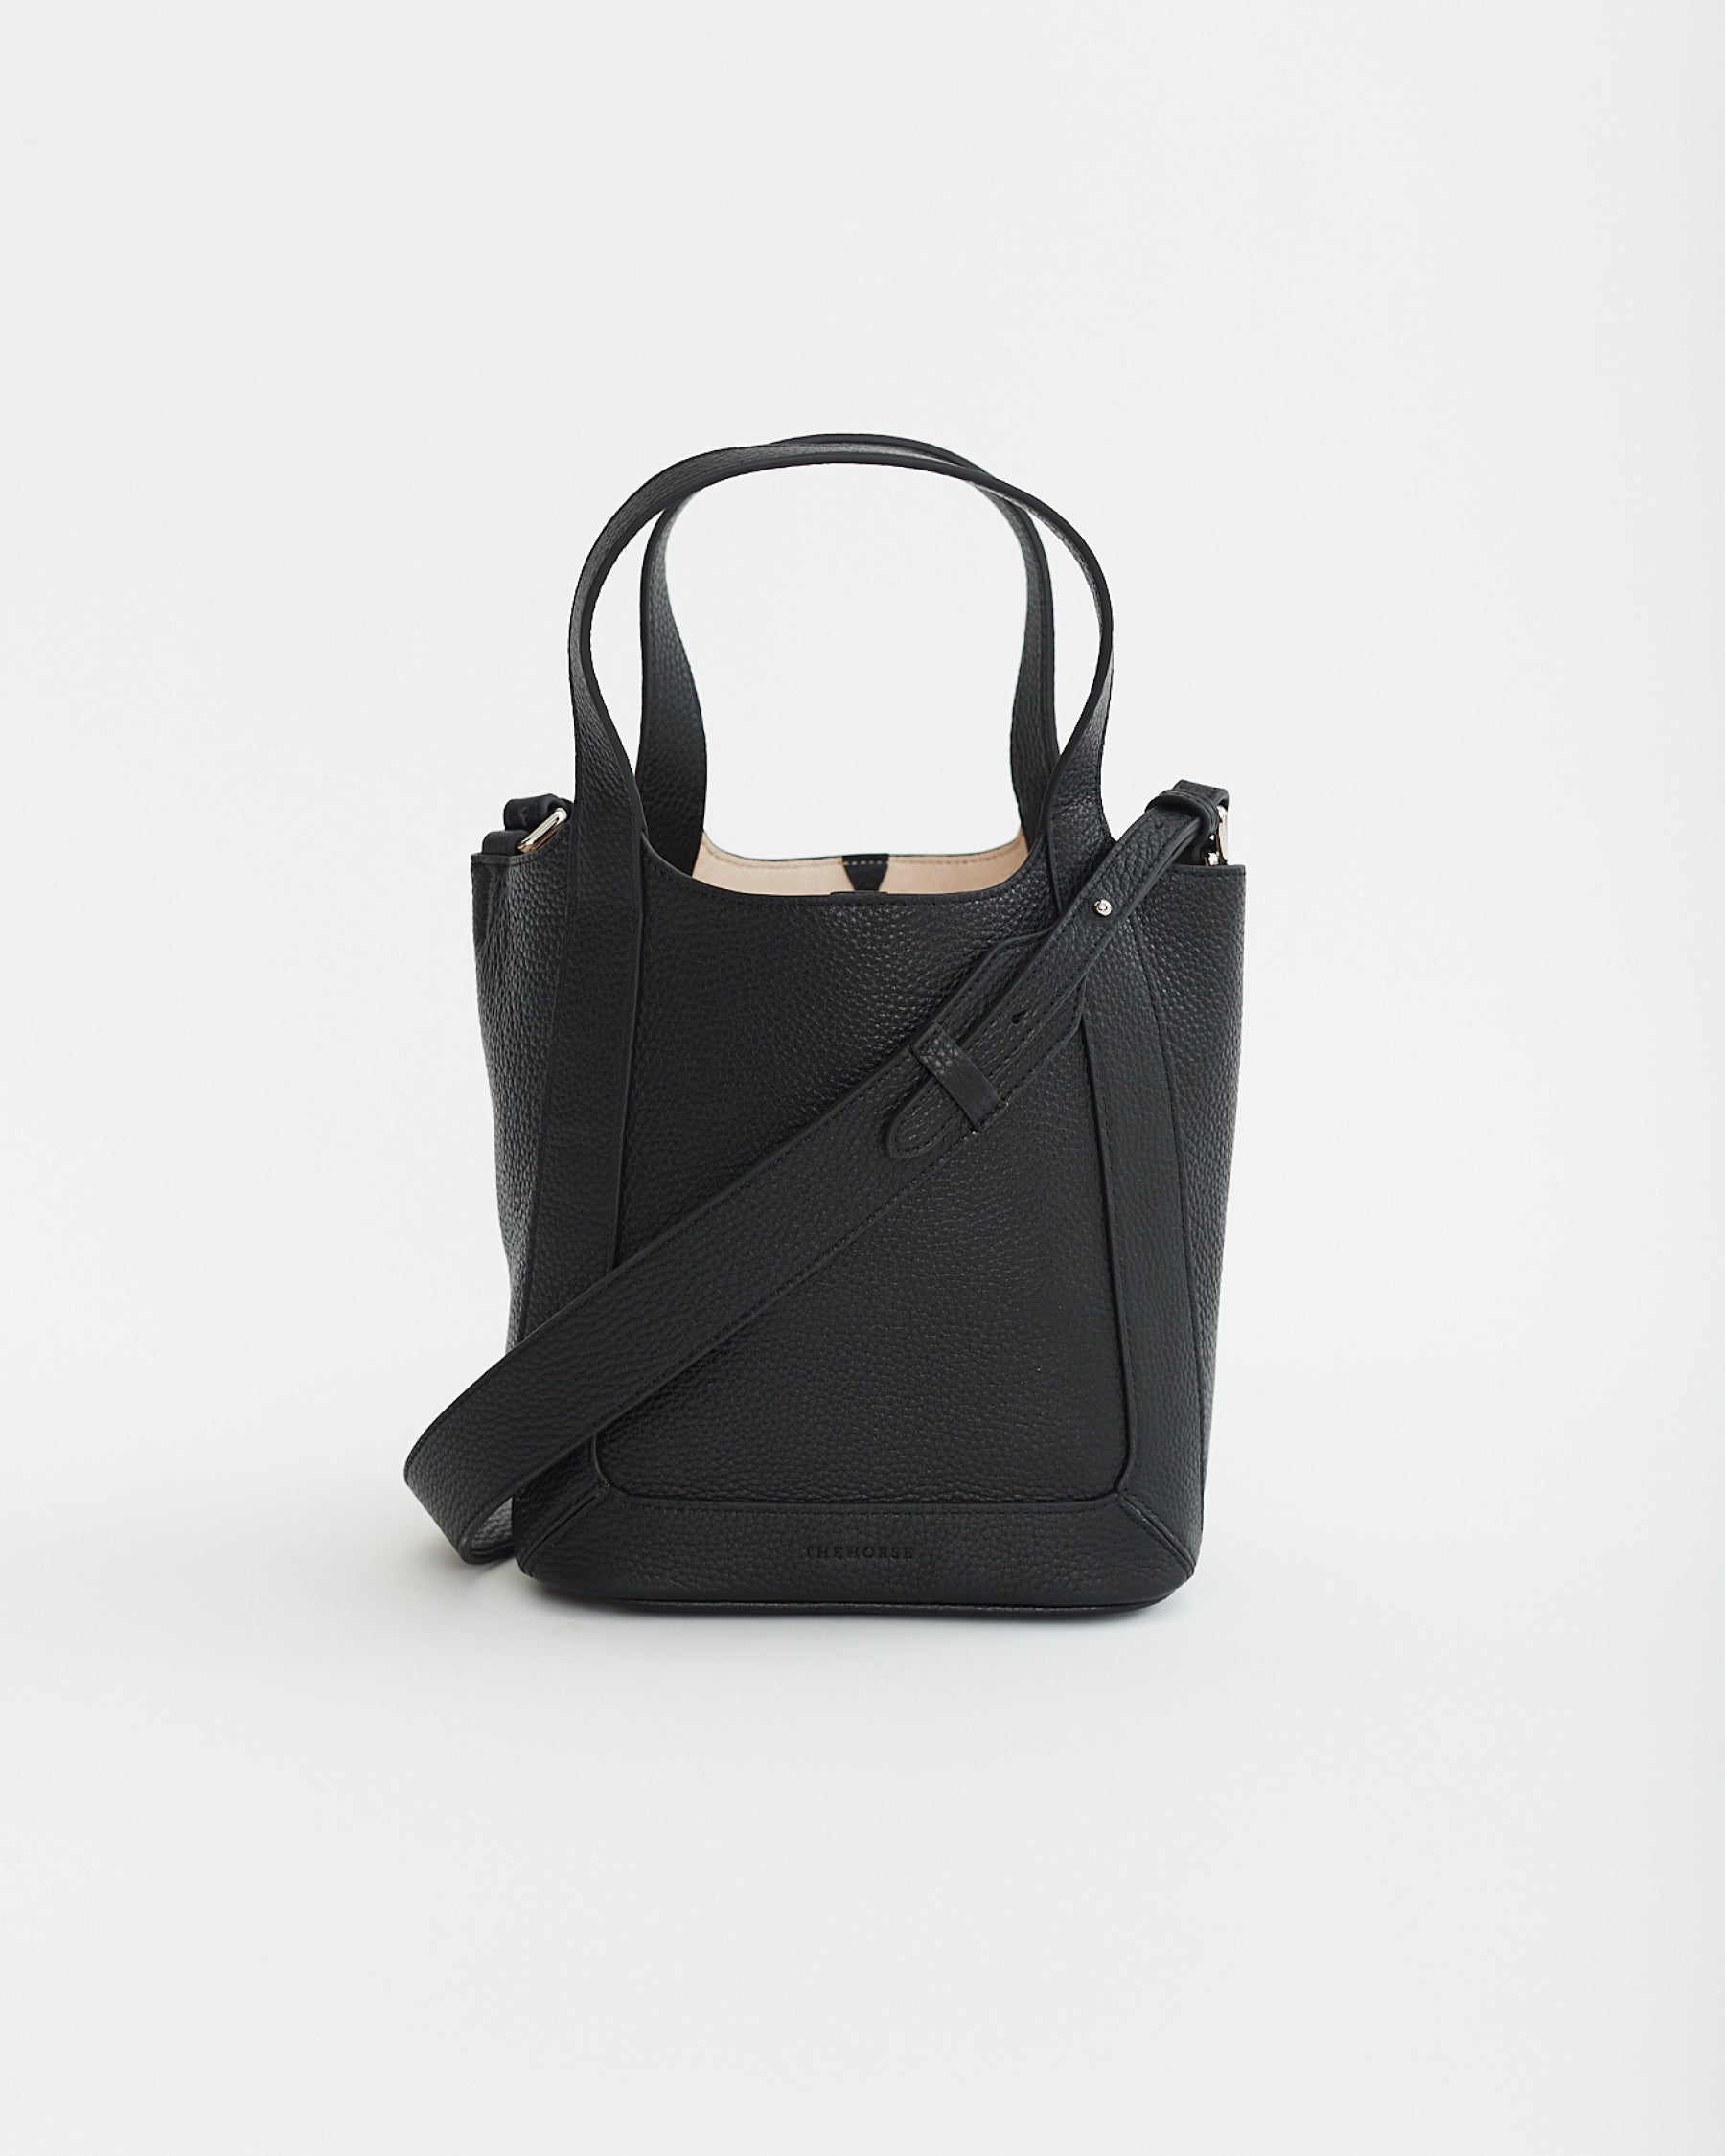 Alexie Tote: Black Pebbled Leather